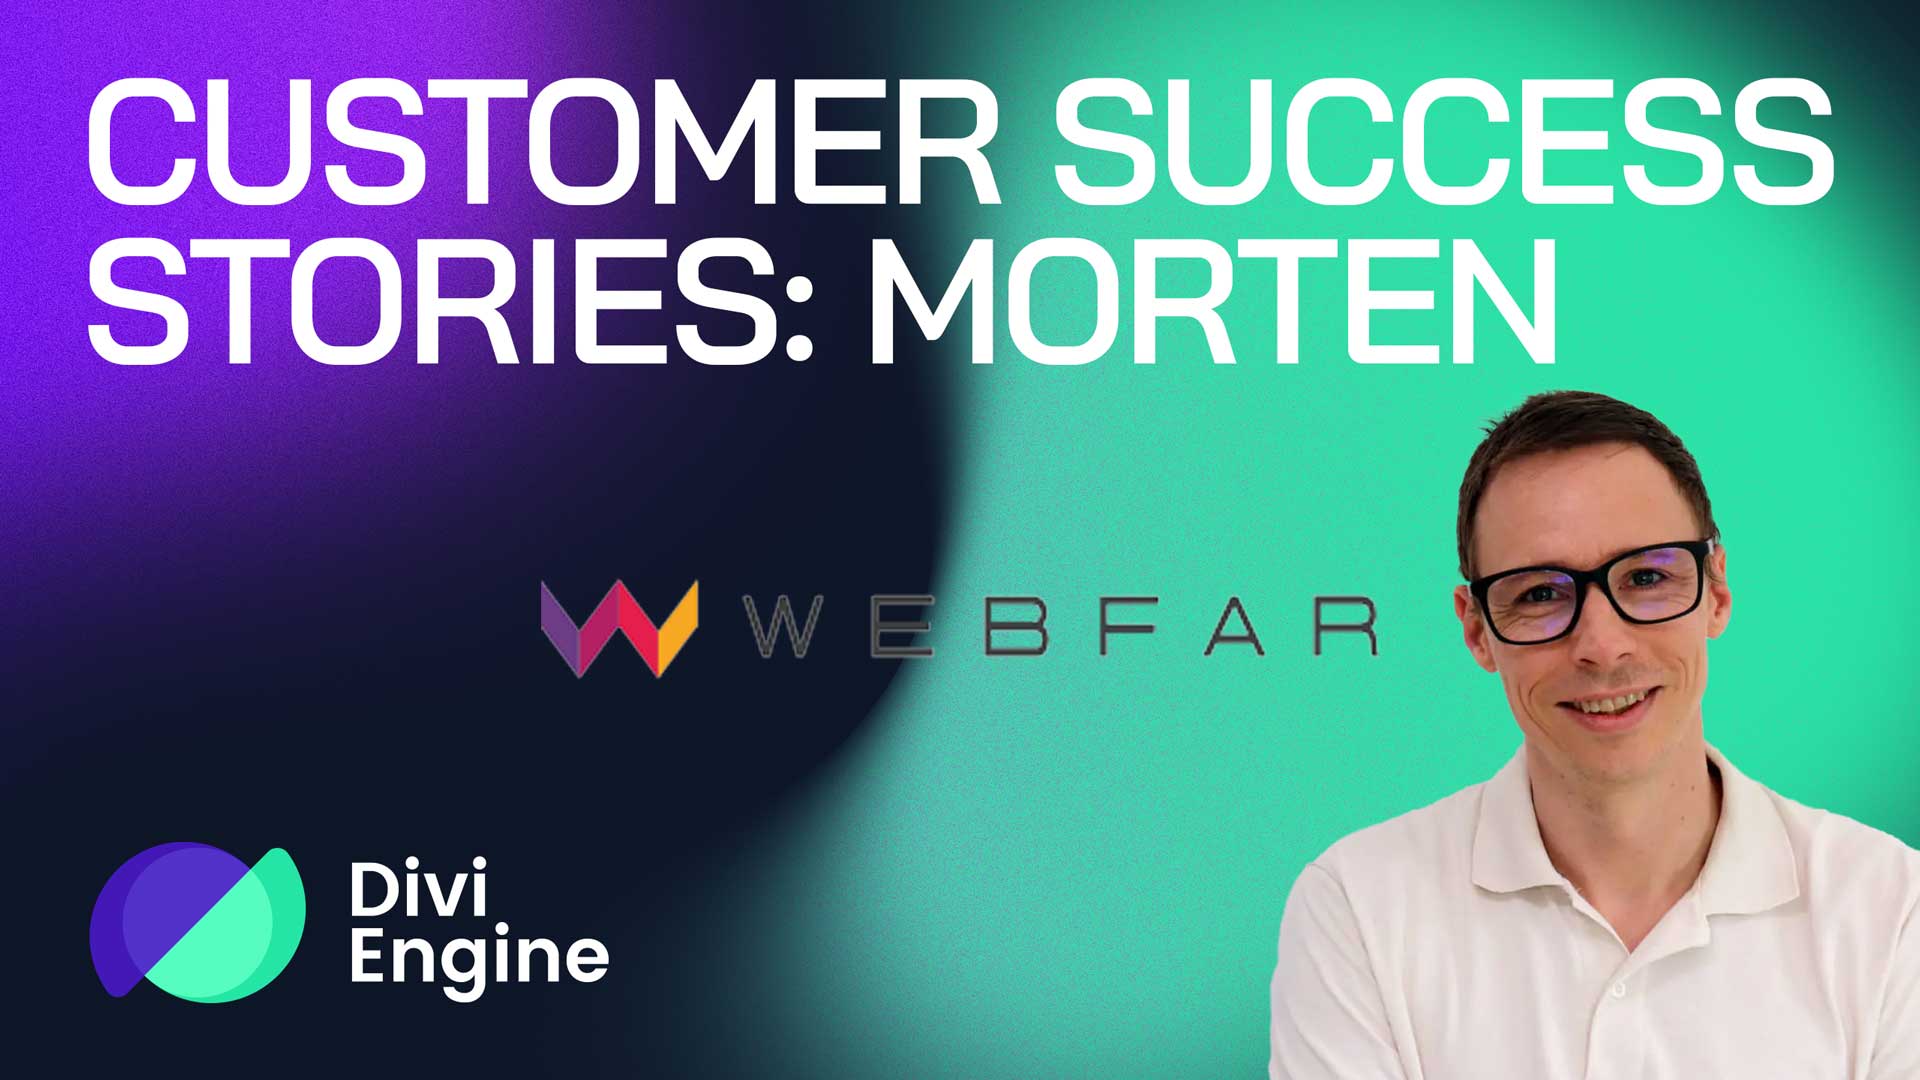 Unlocking Digital Success with Divi Engine: Morten’s Entrepreneurial Journey